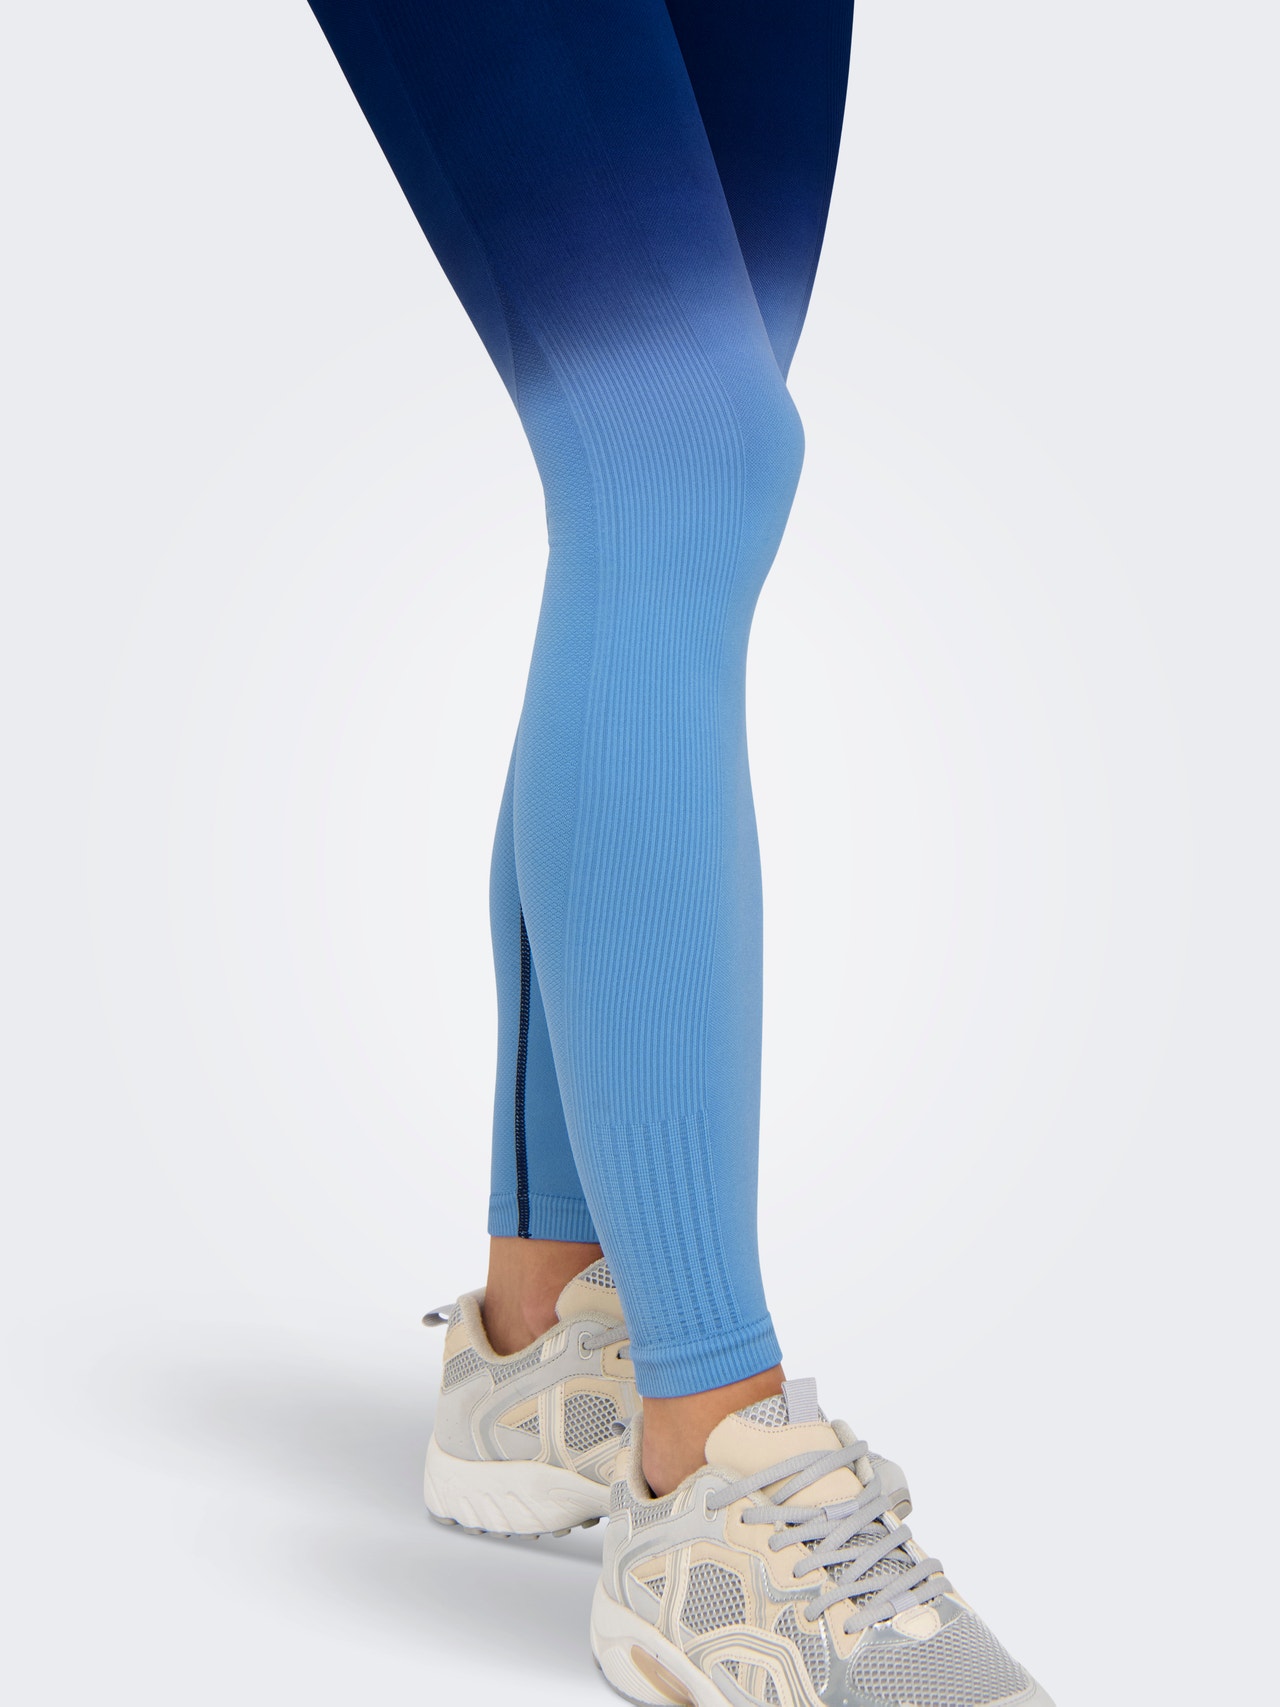 ONLY Leggings Corte tight Cintura alta -Blissful Blue - 15318911